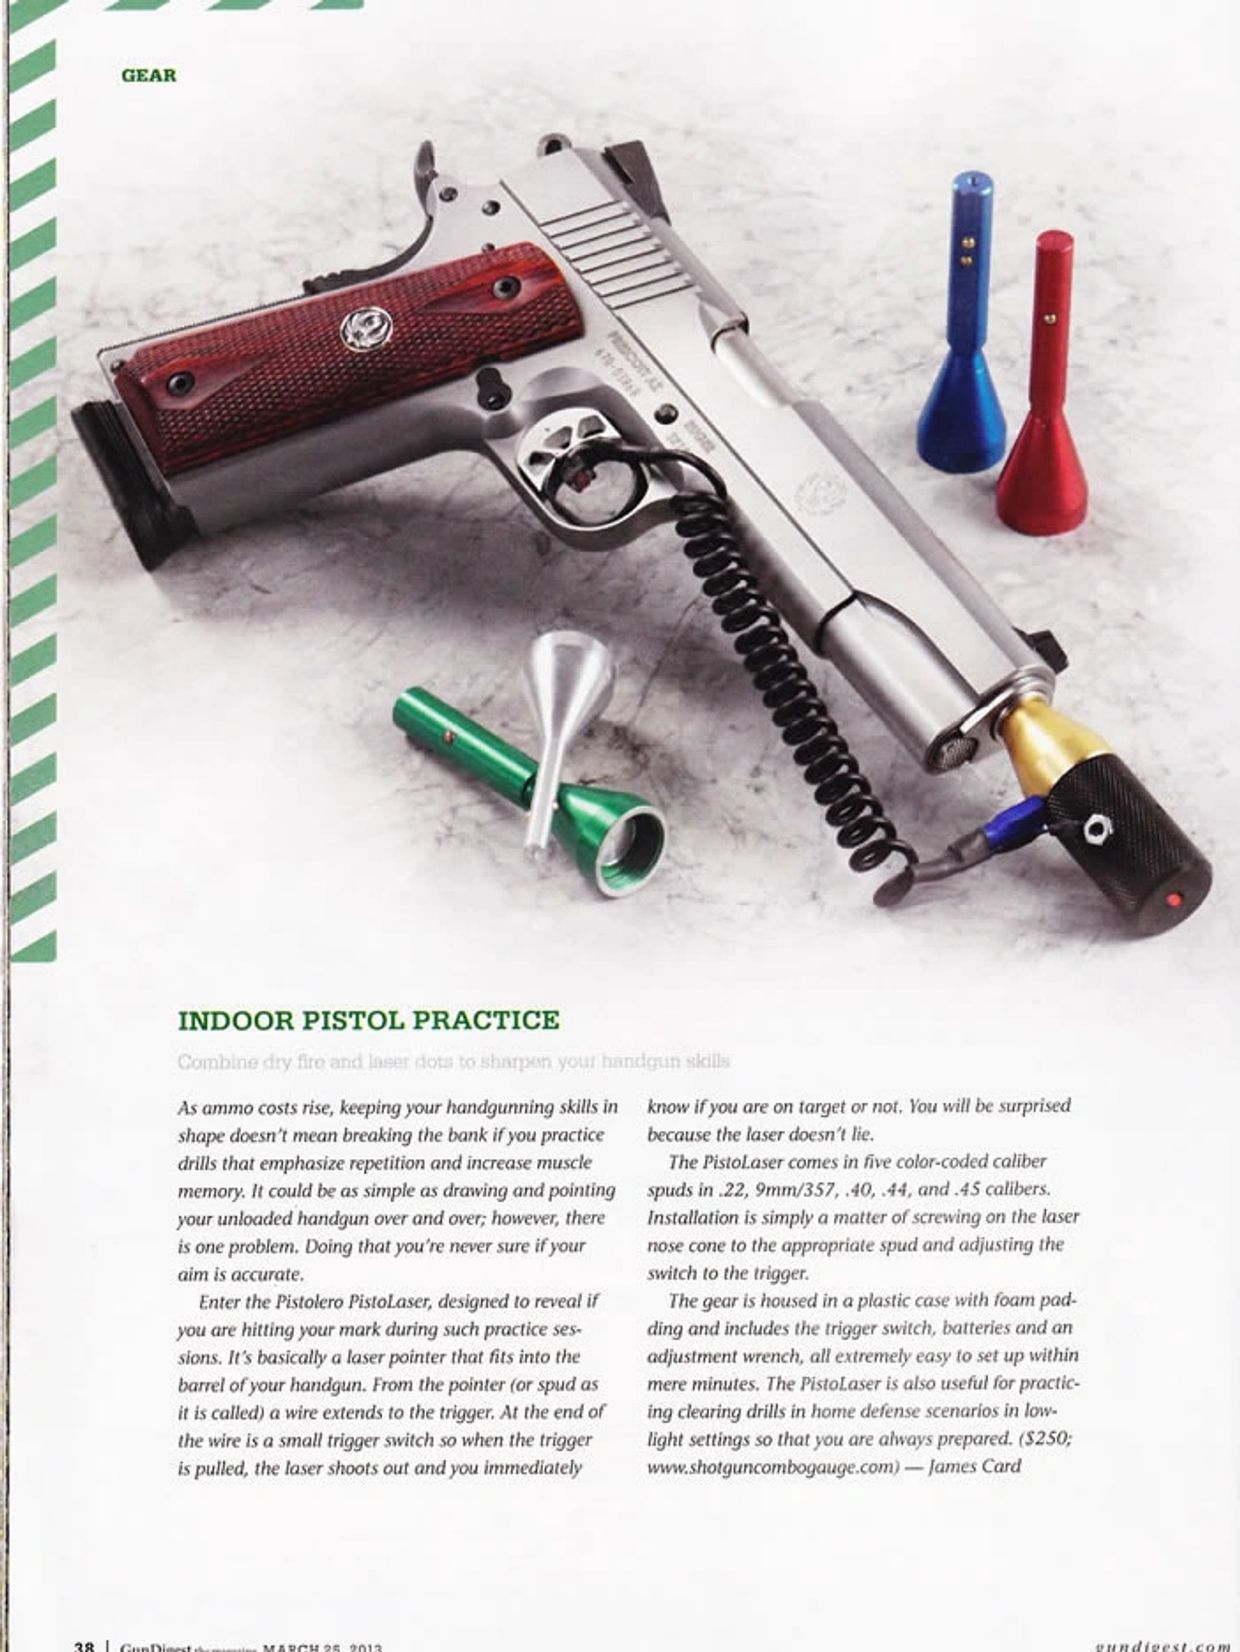 Gun Digest Review of Pistolero PistoLaser